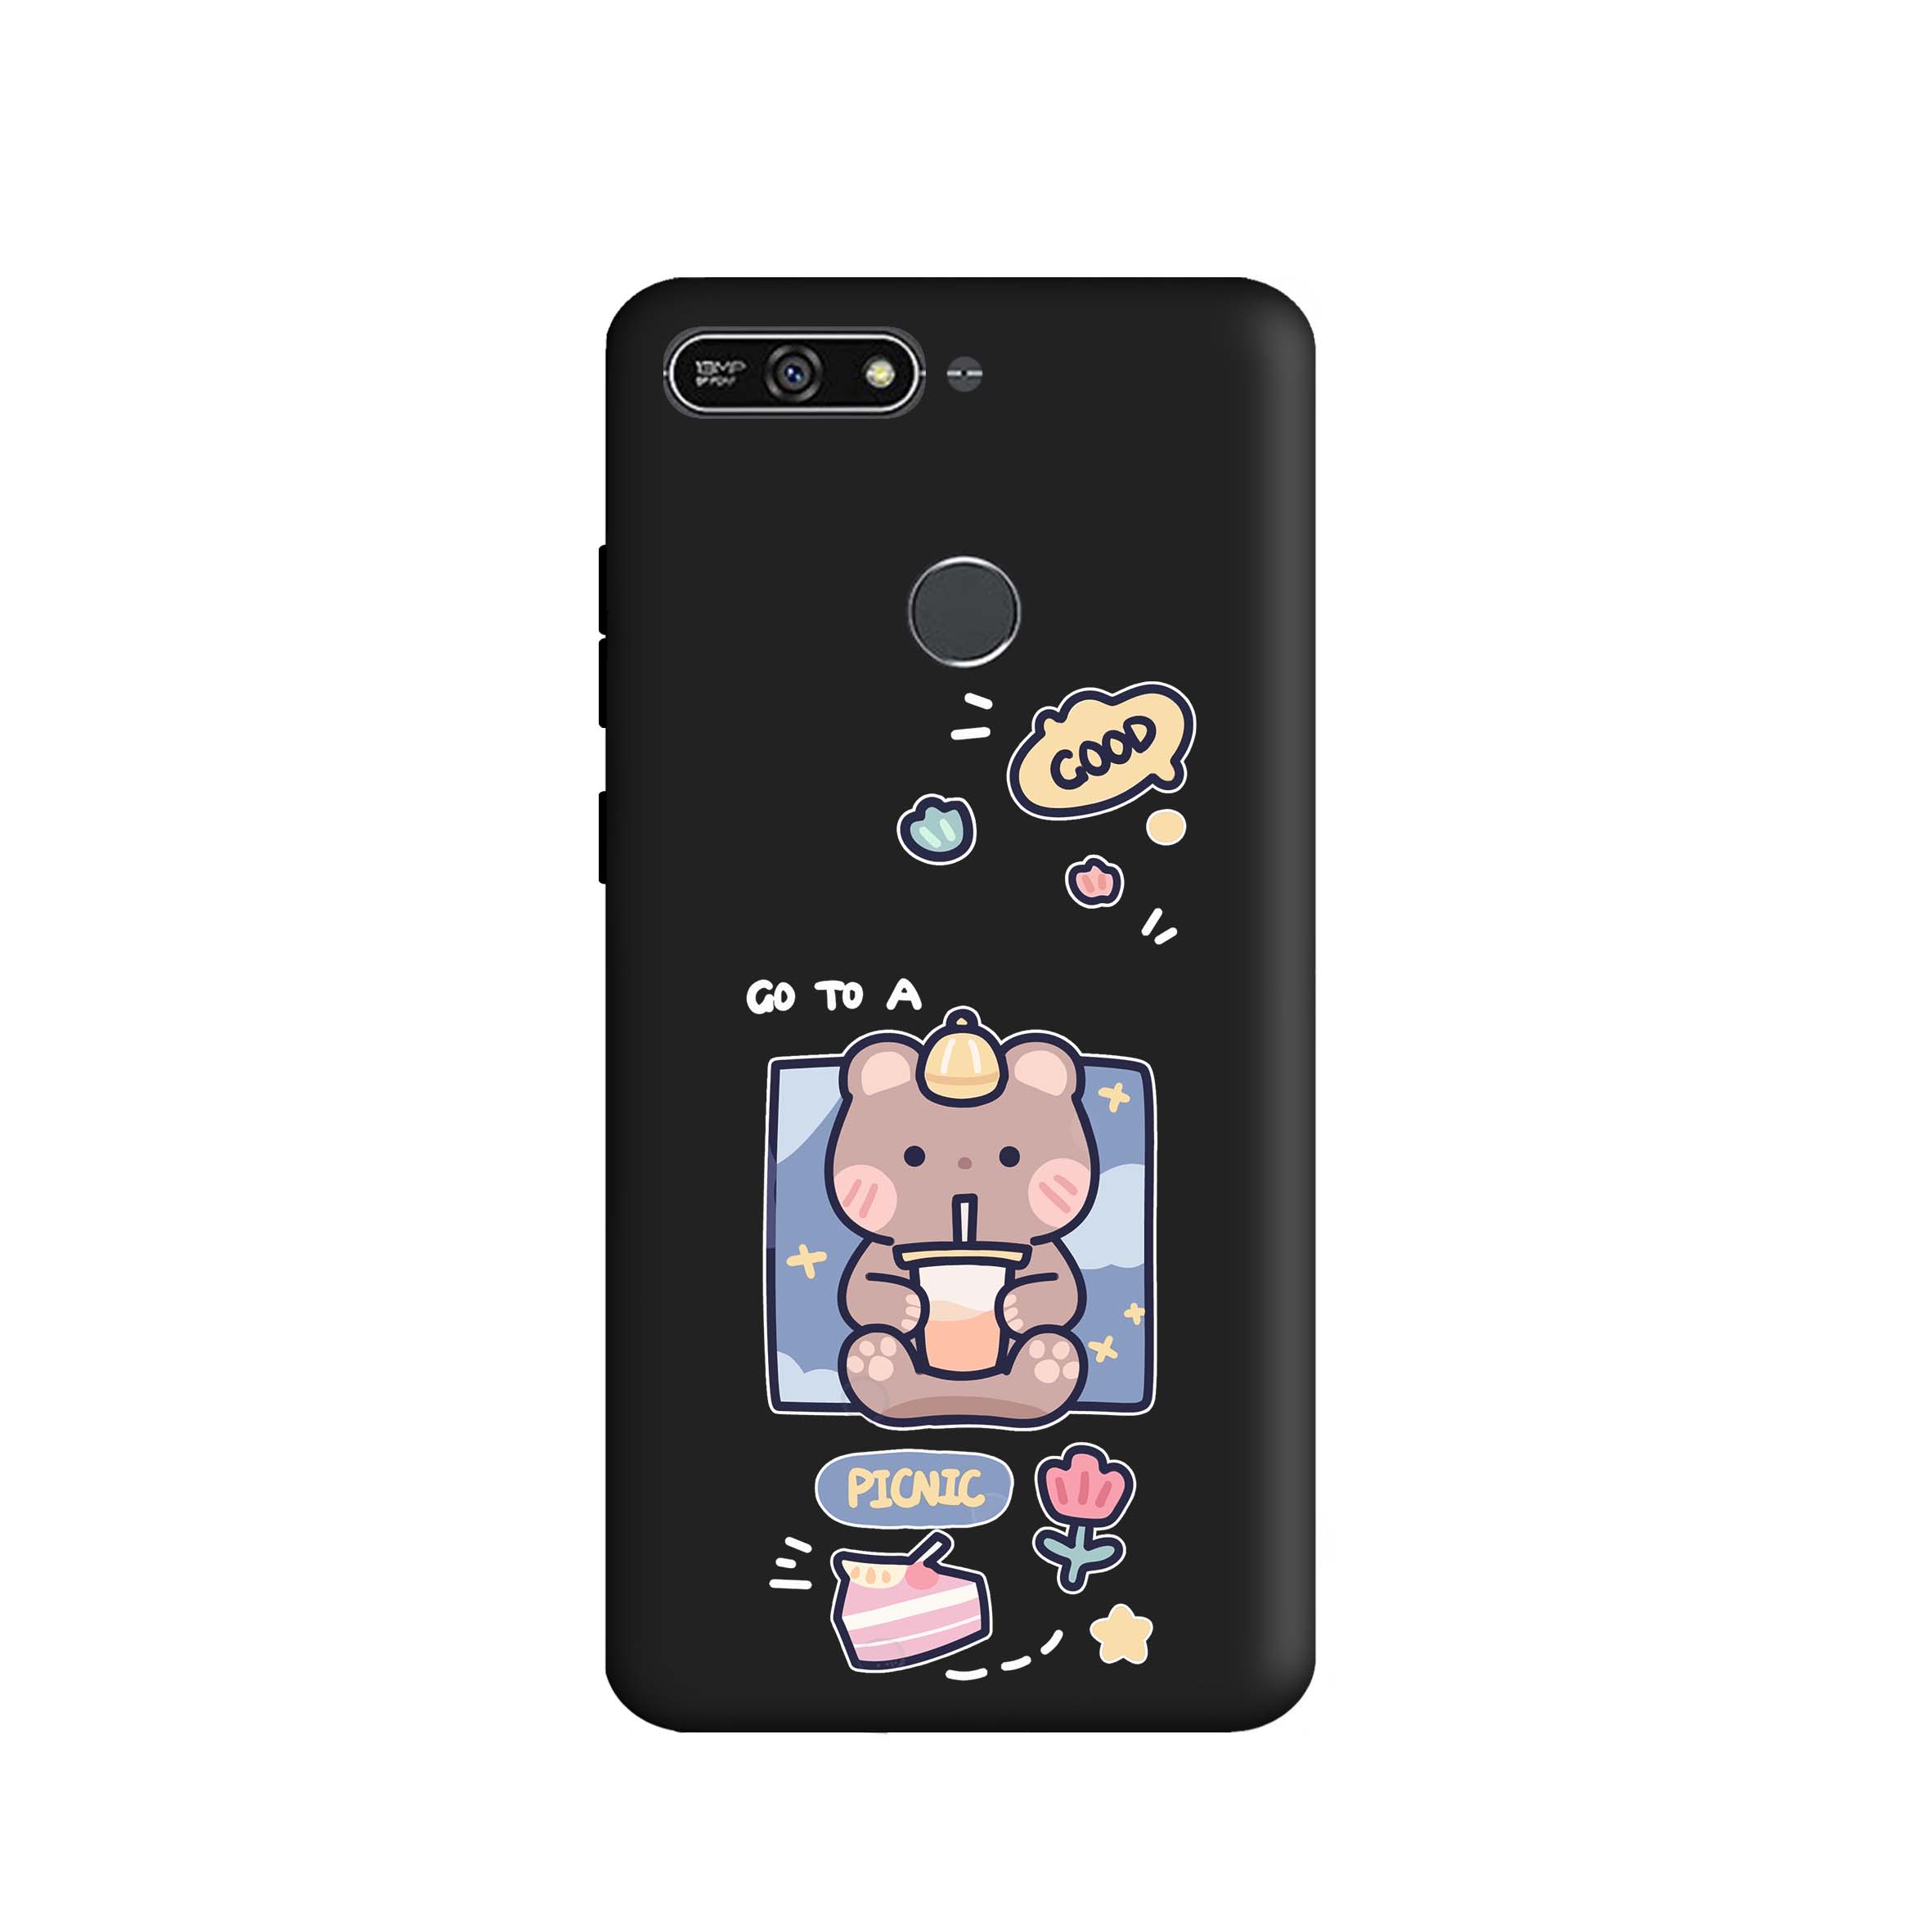 کاور طرح خرس شکمو کد m3290 مناسب برای گوشی موبایل آنر 7A